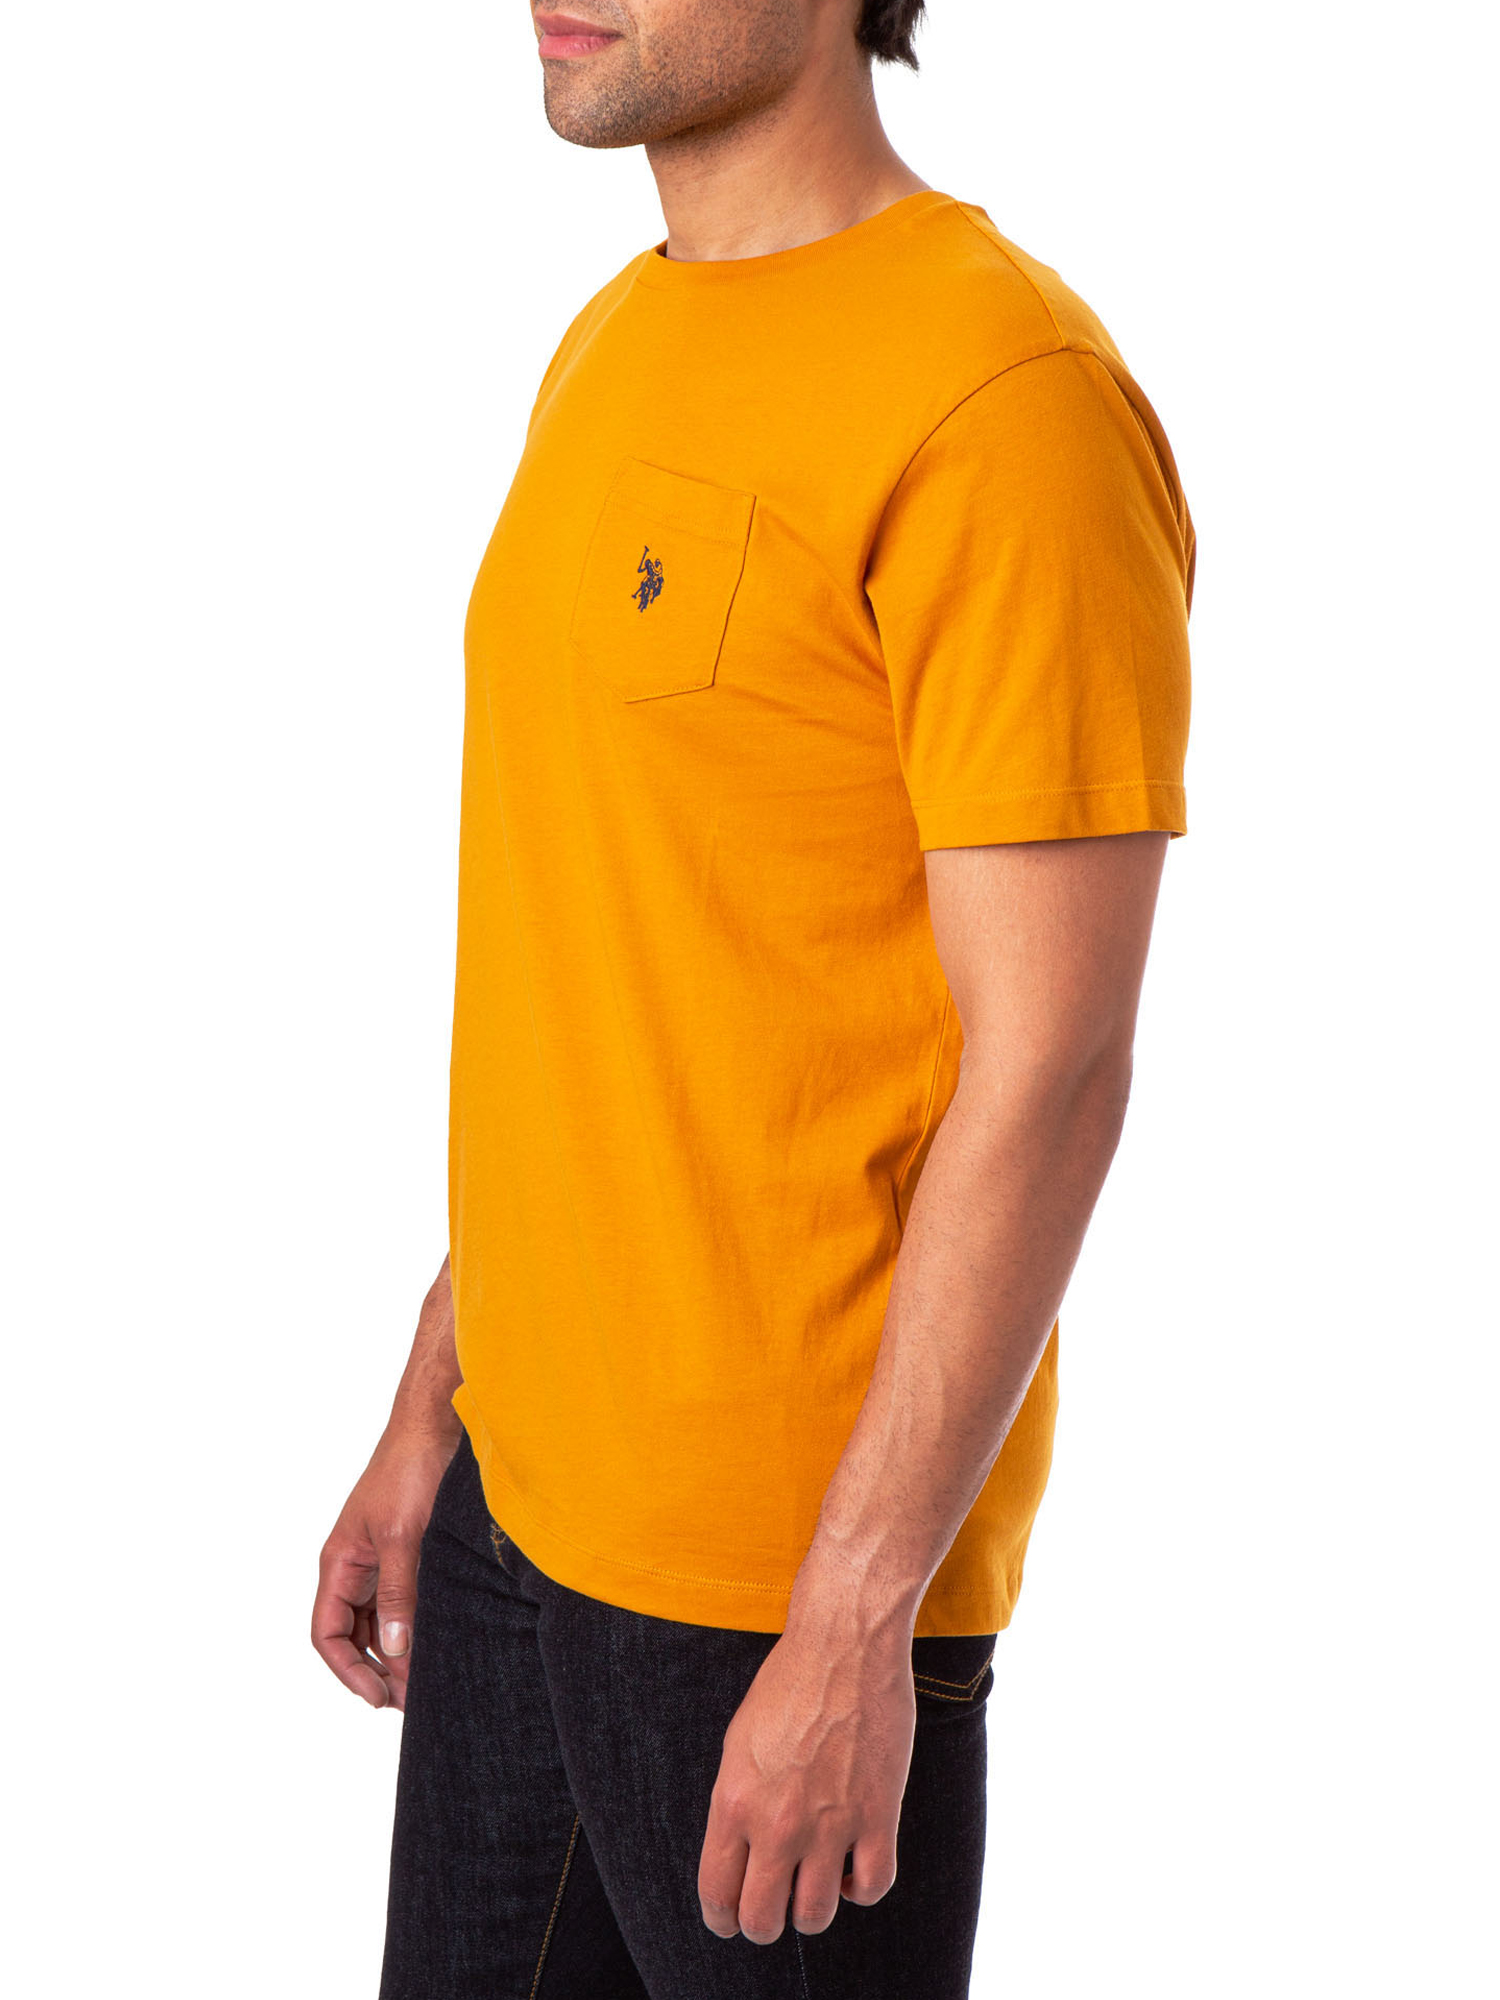 U.S. Polo Assn. Men's Pocket T-Shirt - image 2 of 3